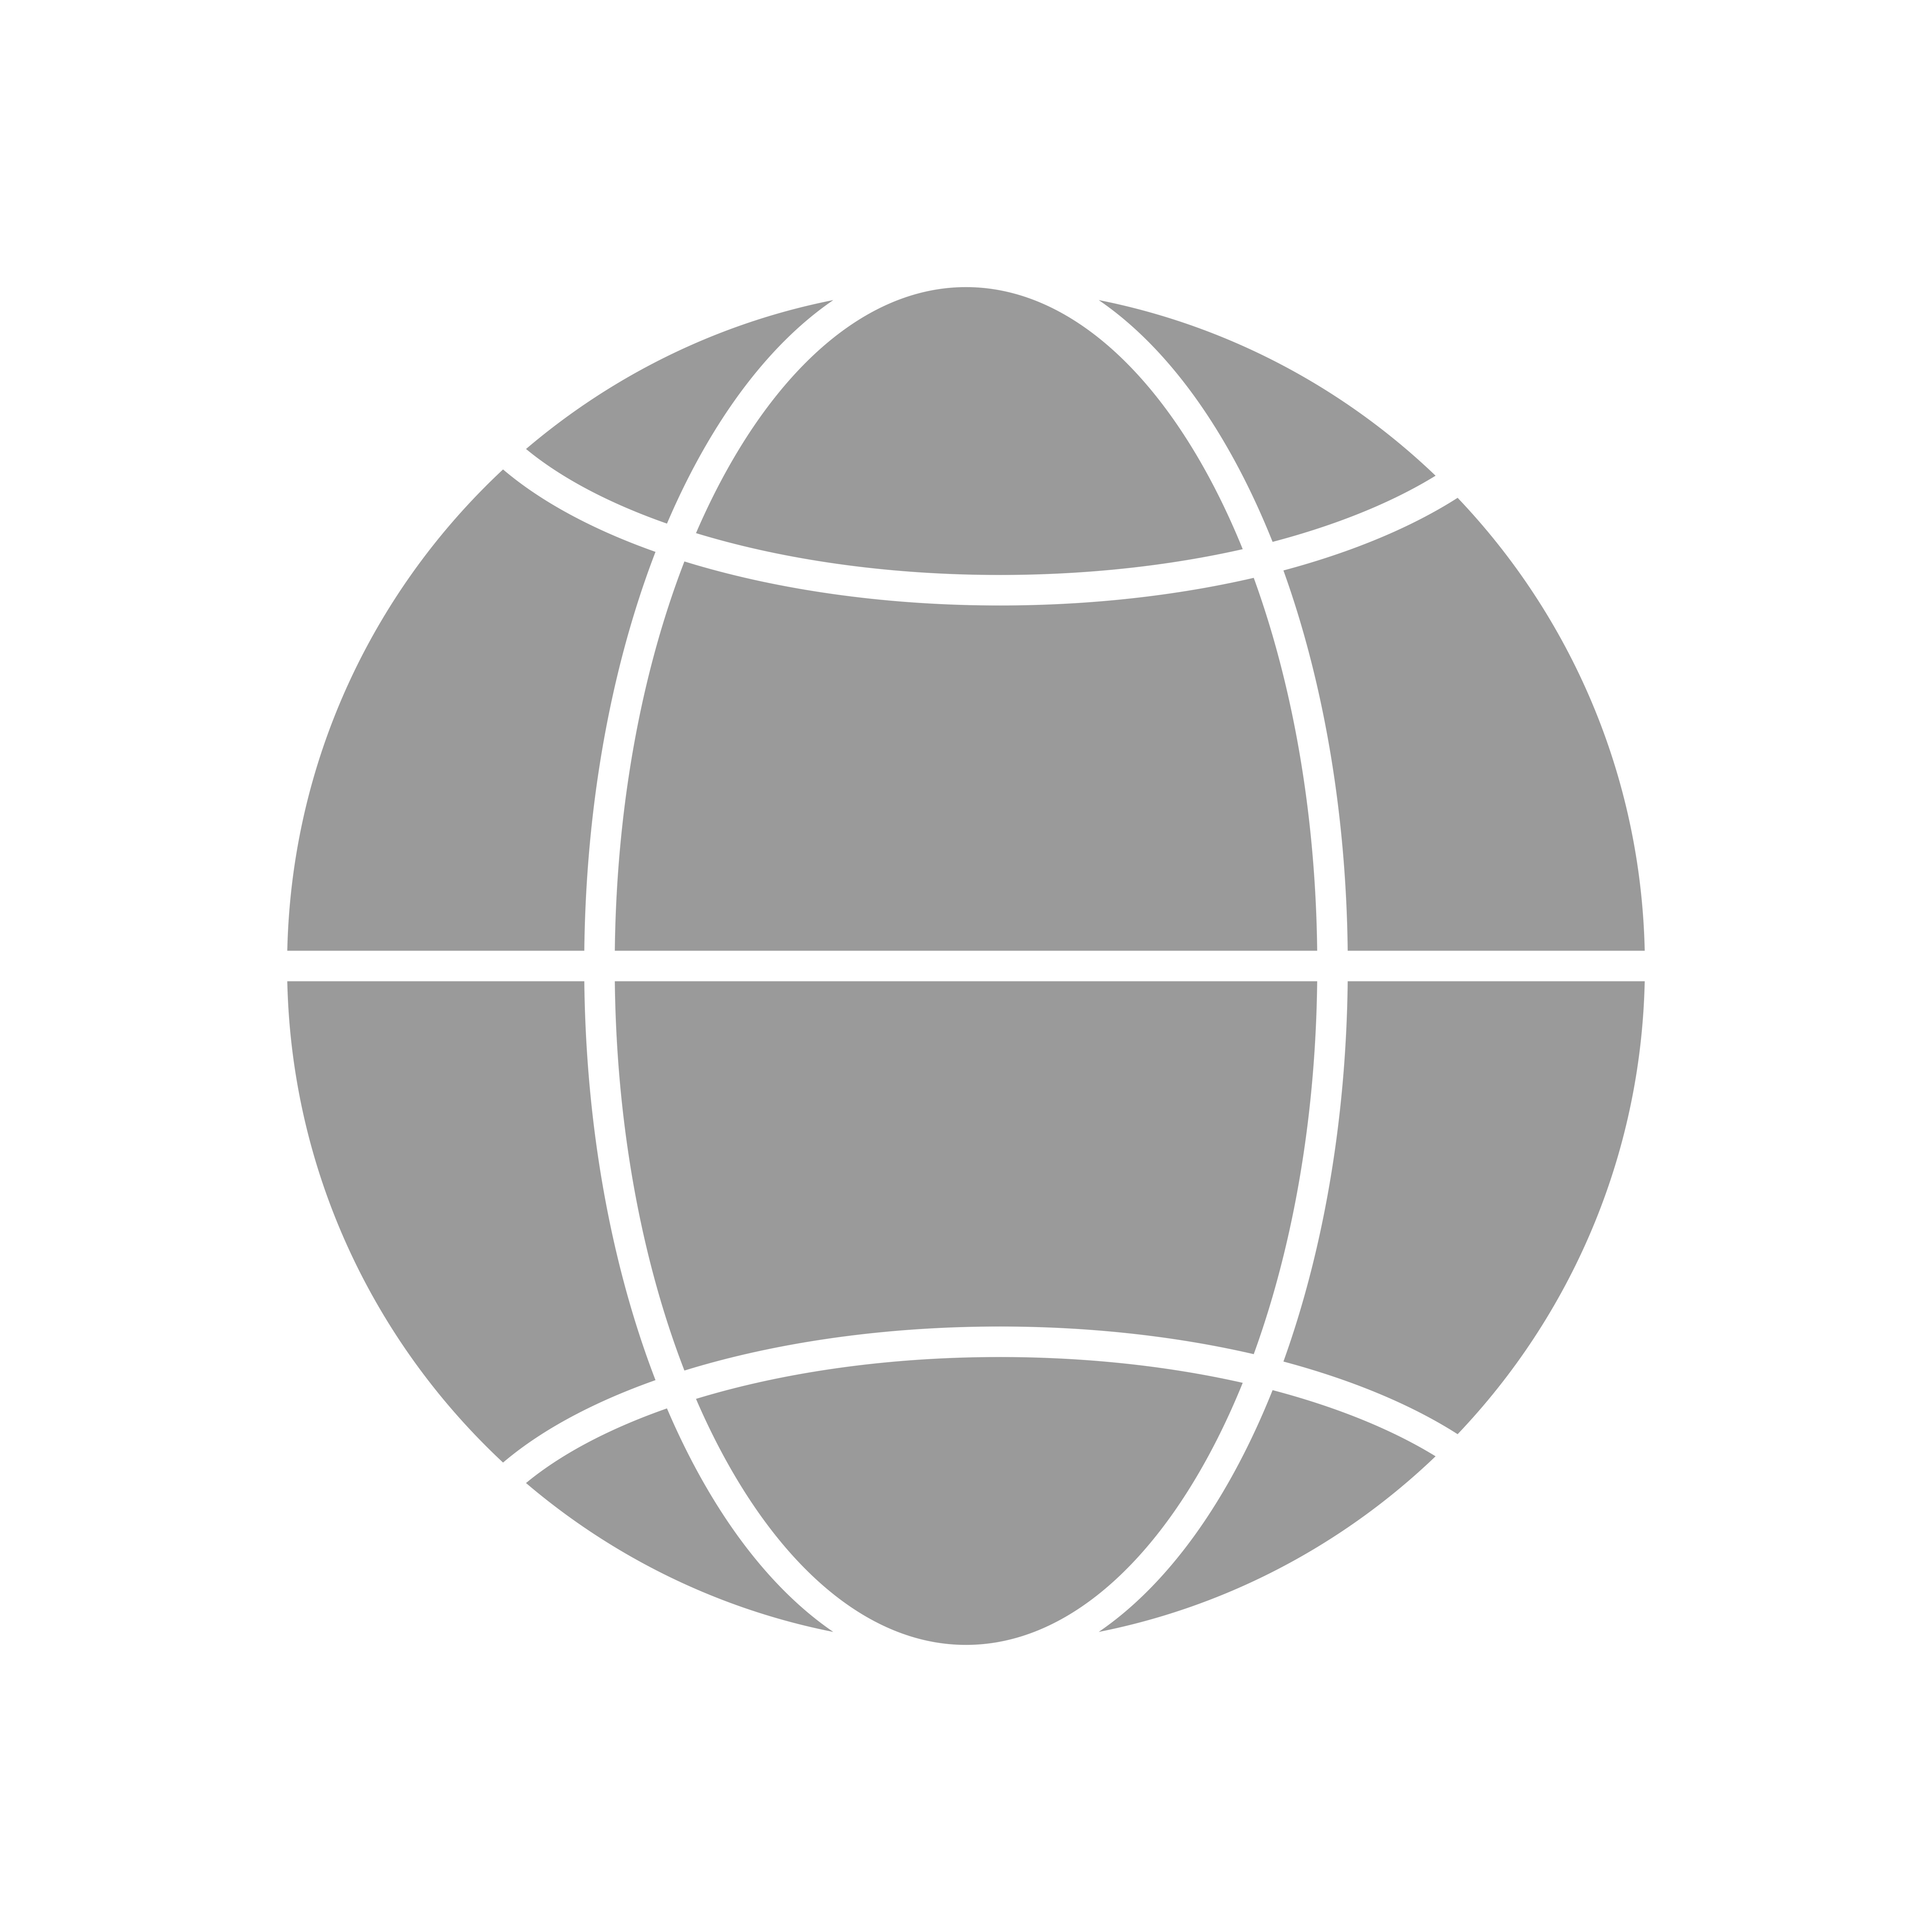 Download Vector Globe Icon - Download Free Vectors, Clipart Graphics & Vector Art